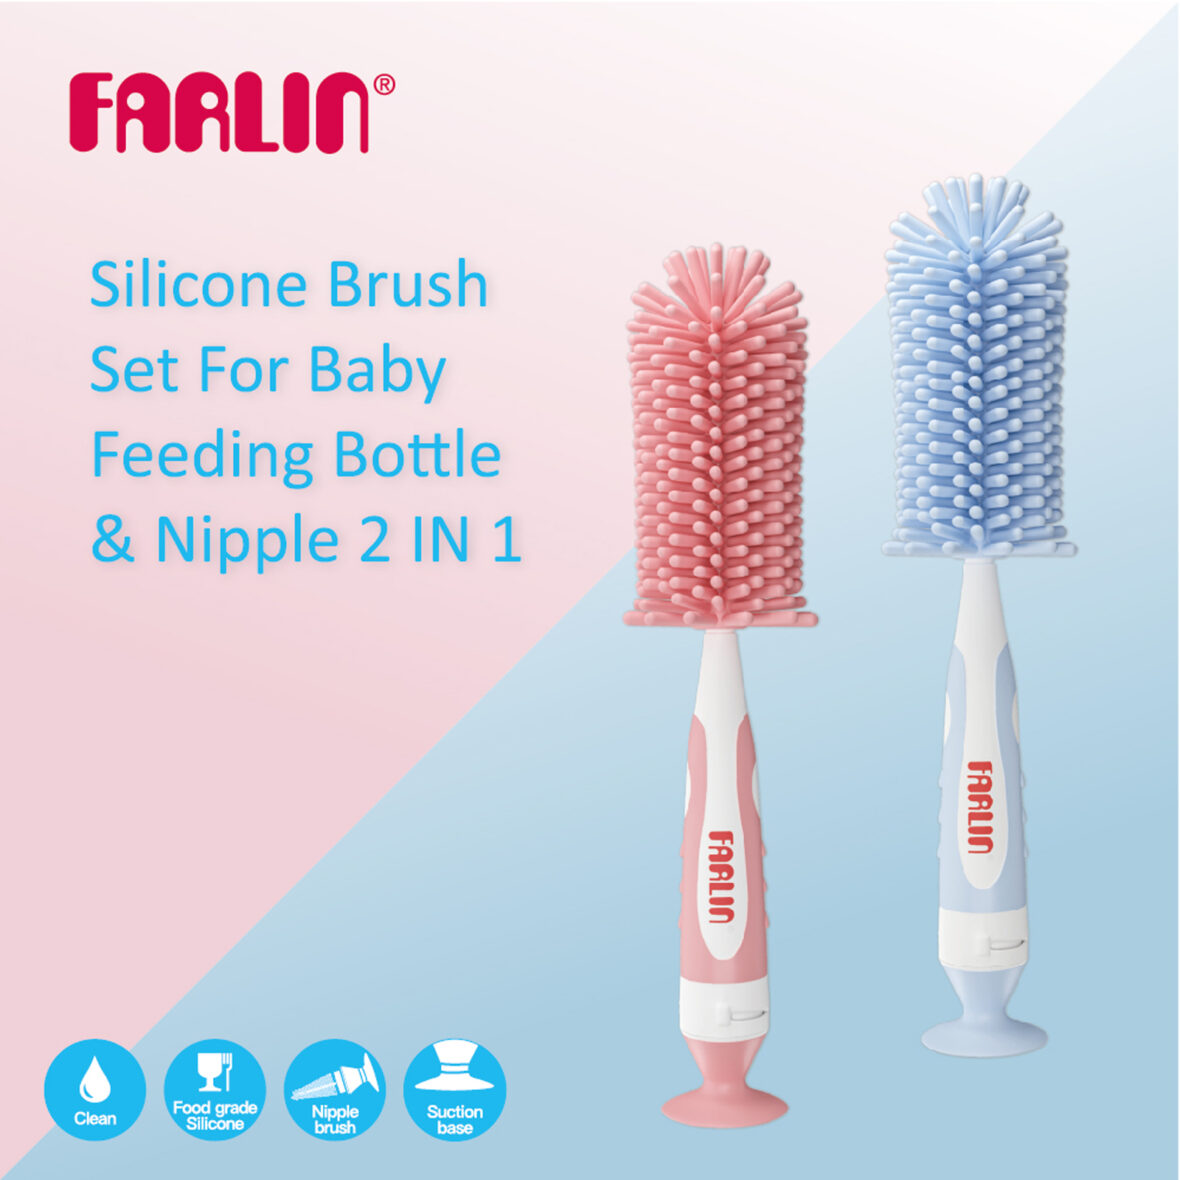 Farlin Silicone Brush Set